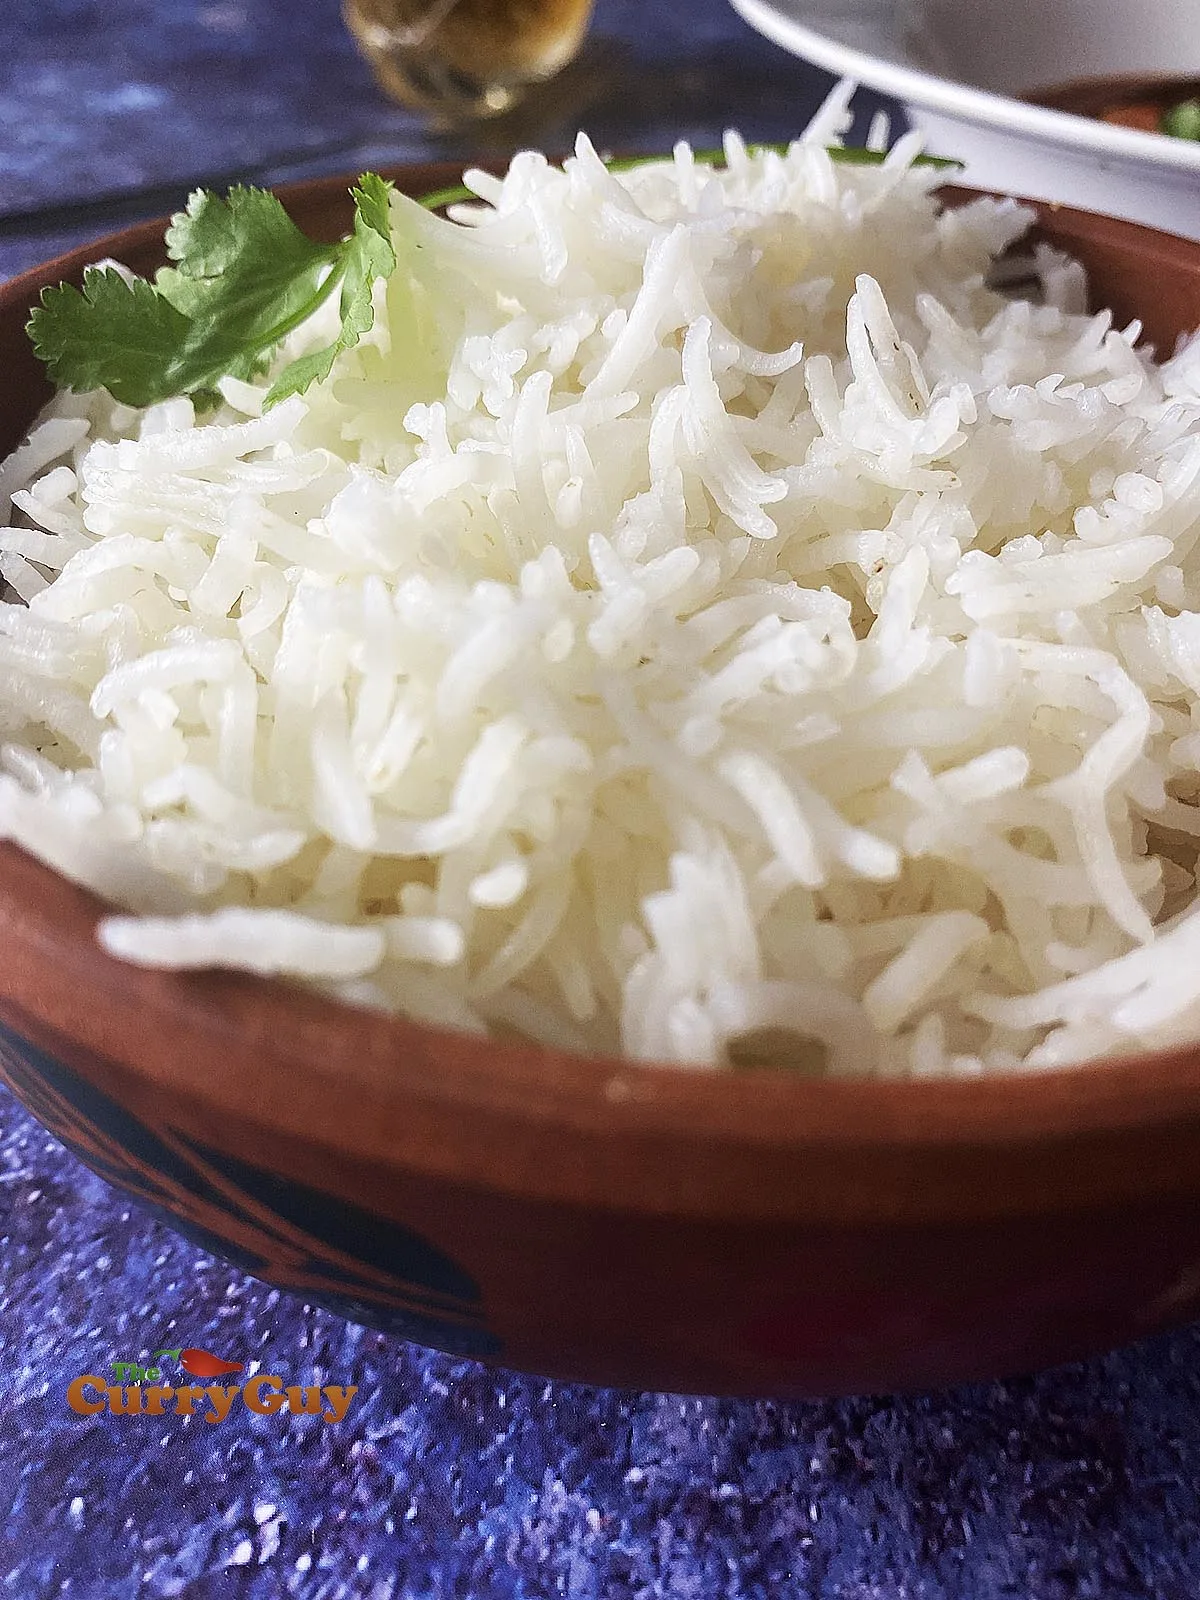 My Basmati rice recipe